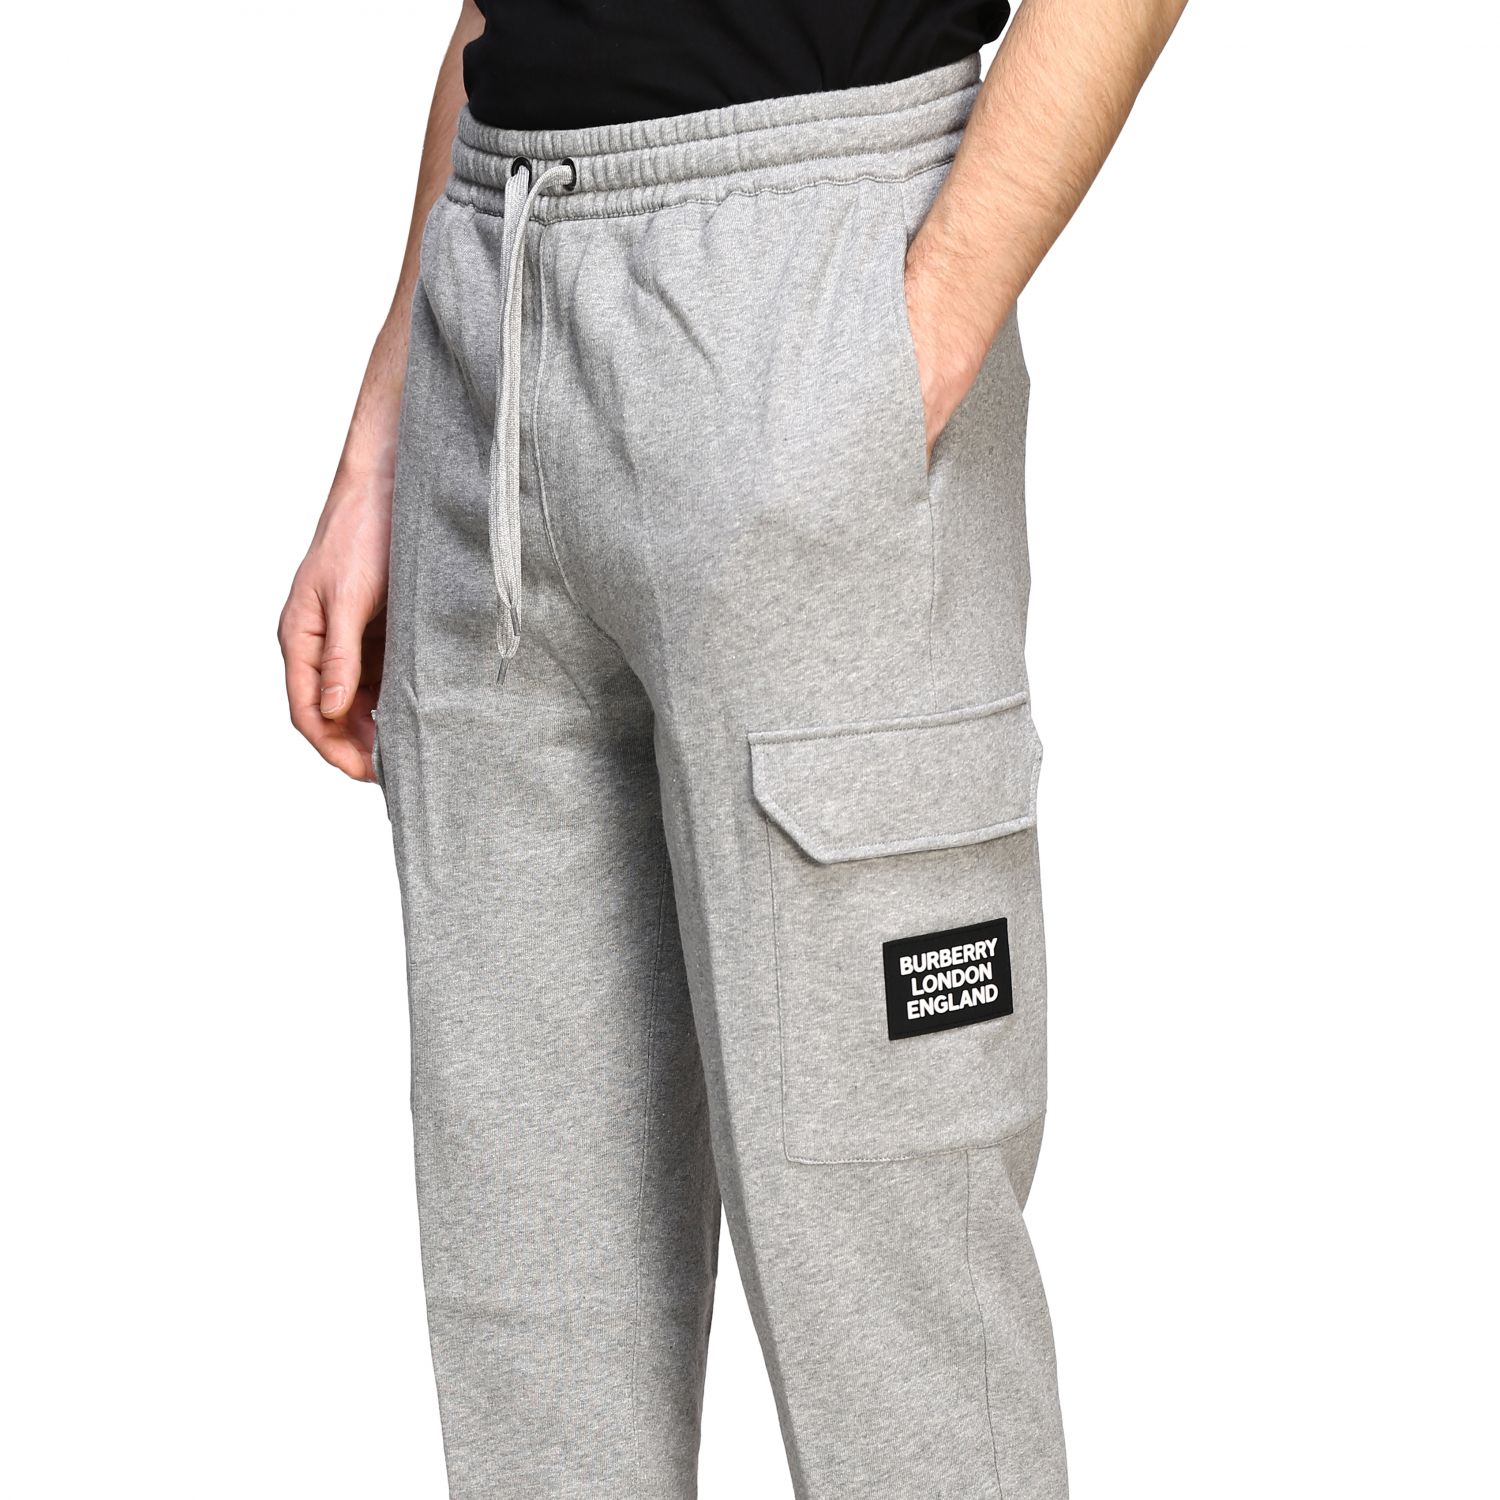 burberry grey pants